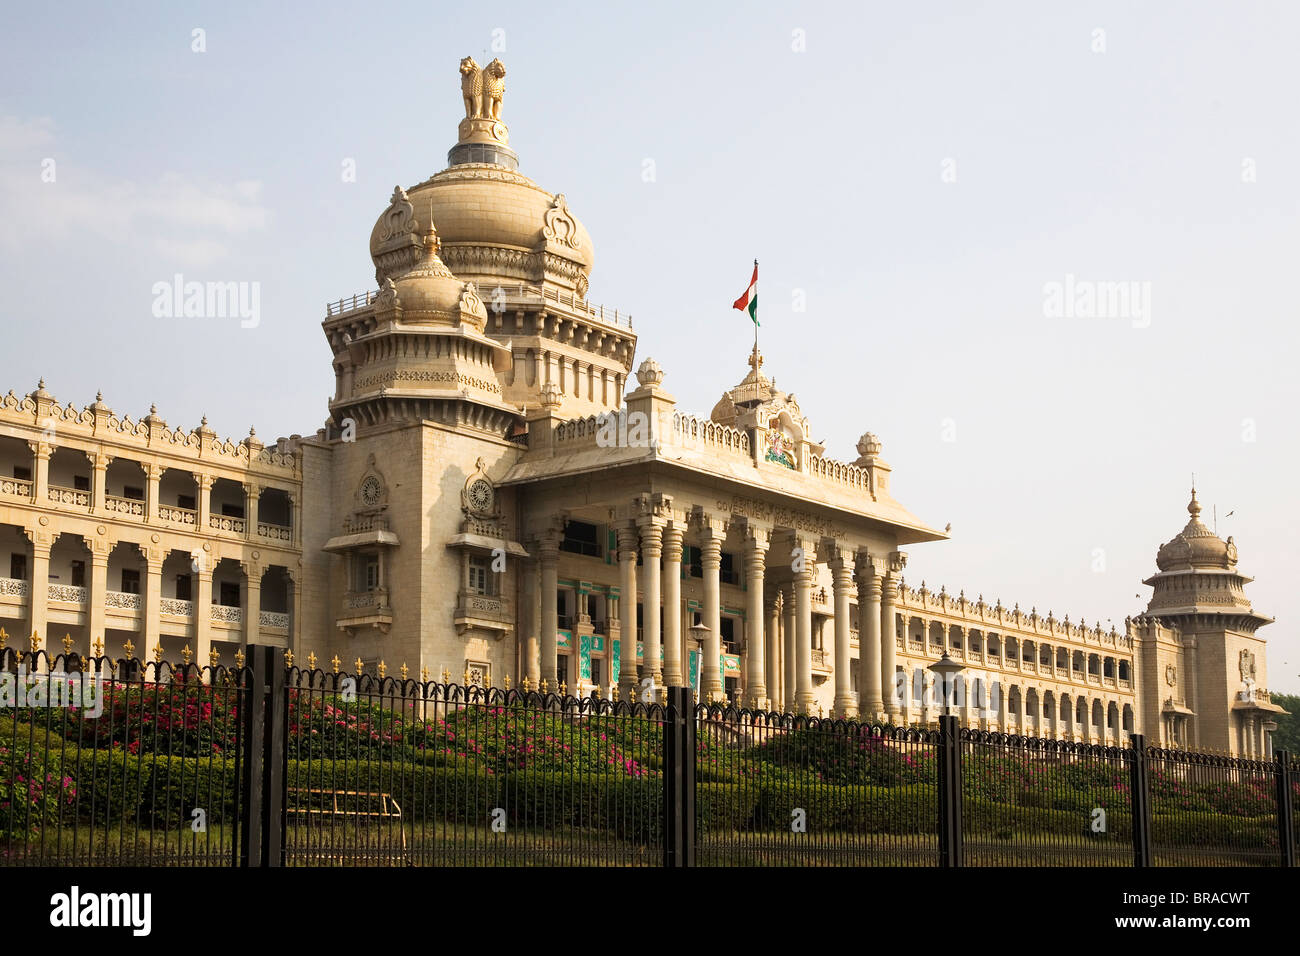 Bengaluru.com | Inspired Cityscapes